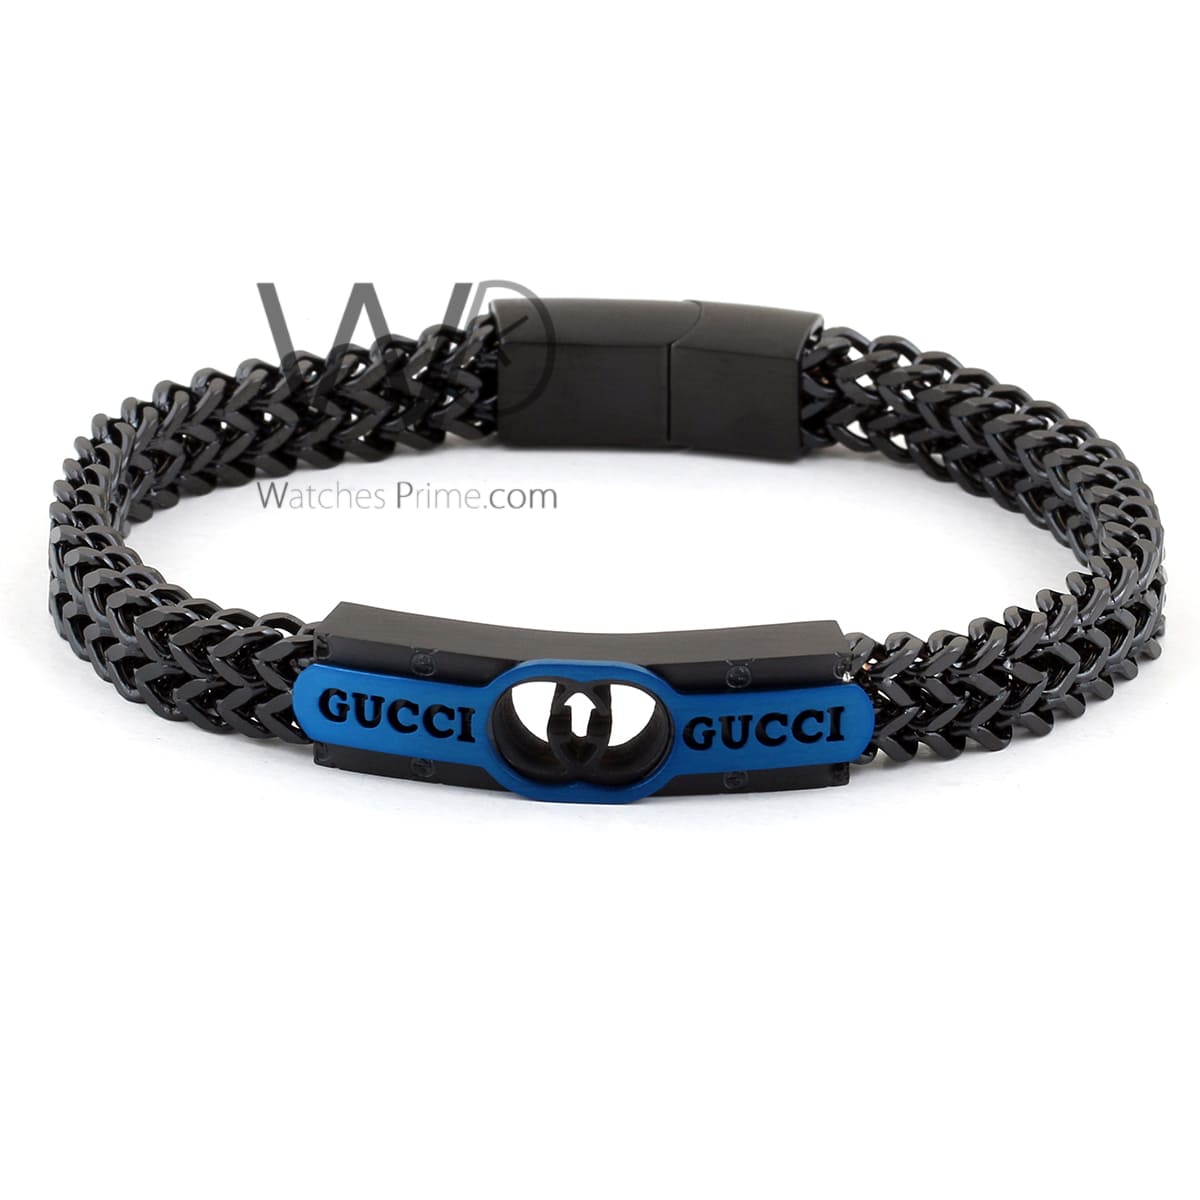 Gucci metal black men bracelet | Watches Prime